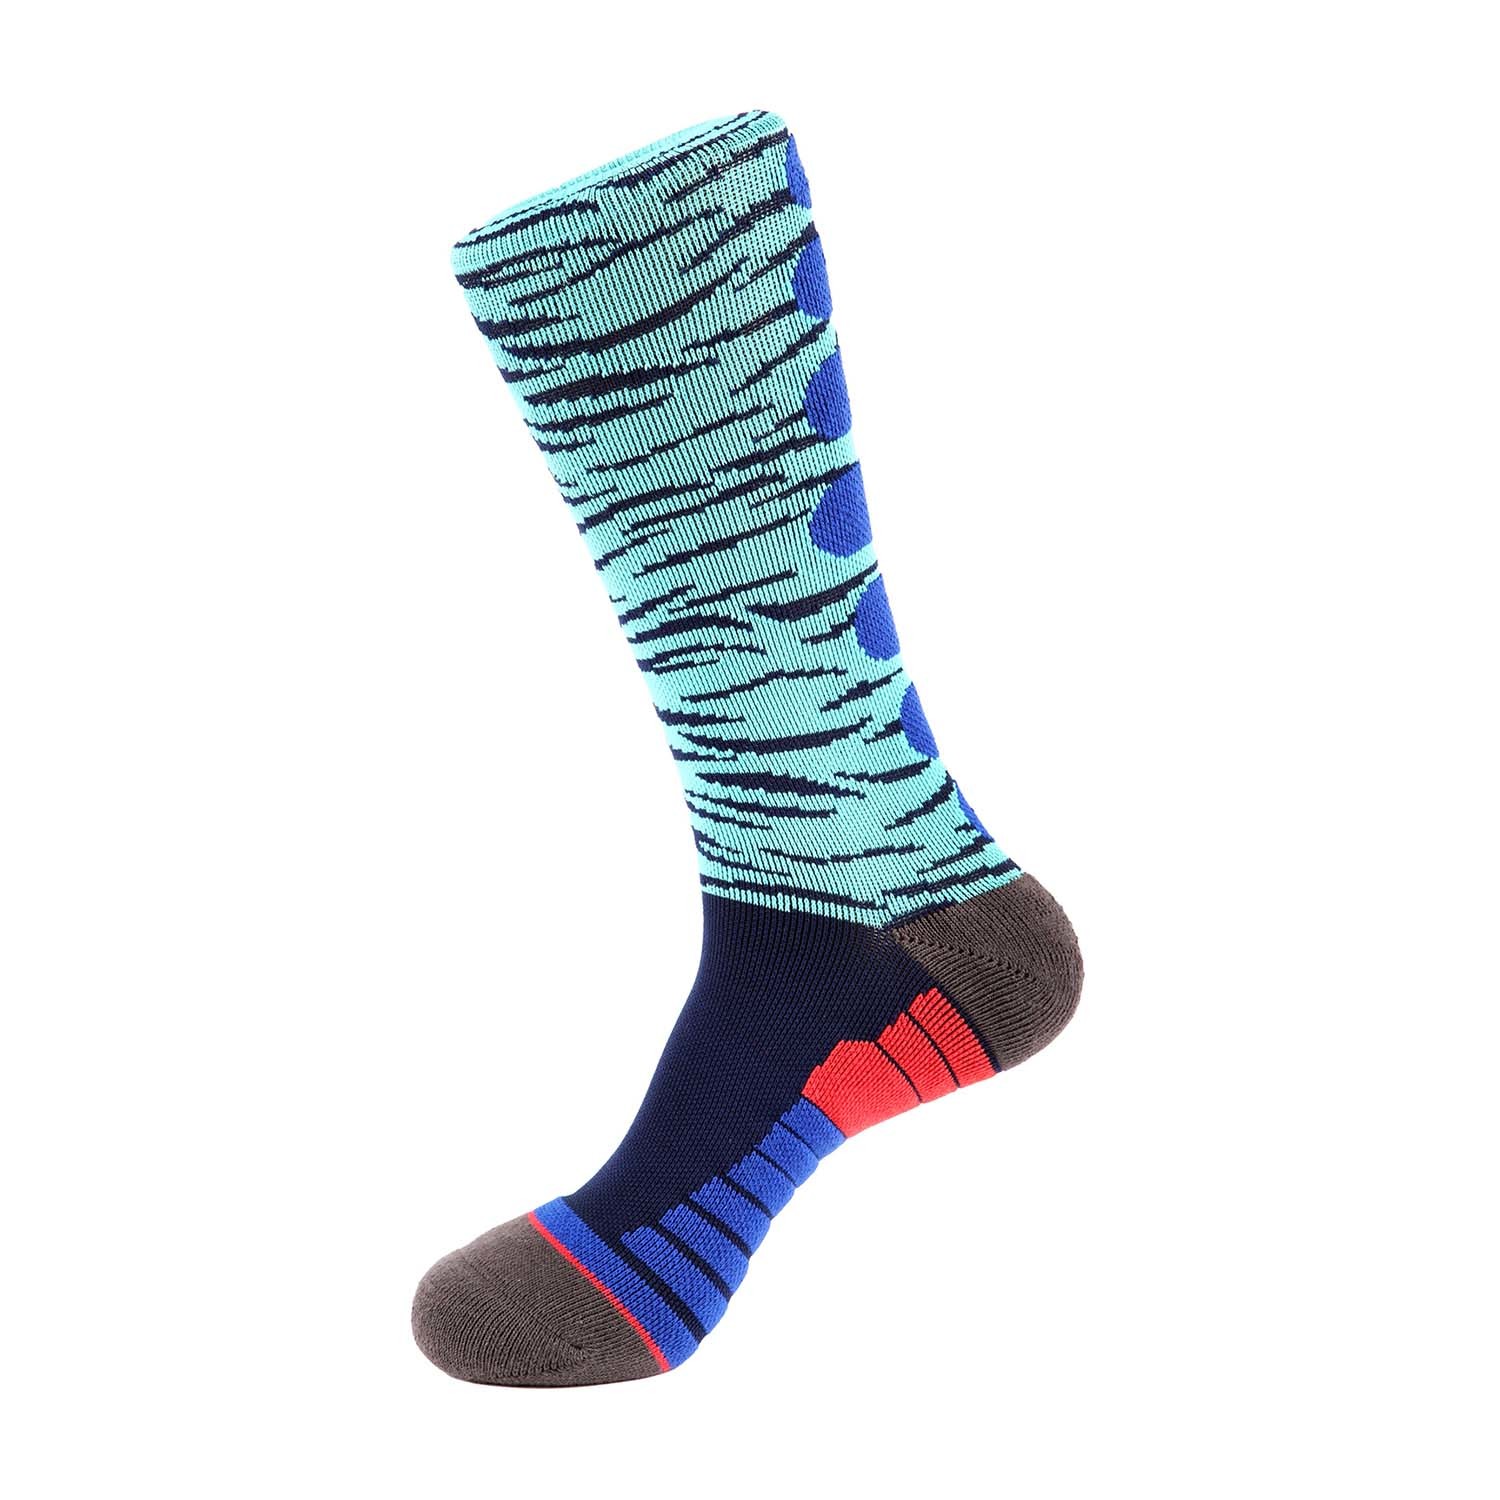 Tiger Stripe Athletic Socks // Light Blue Multi - Unsimply Stitched ...